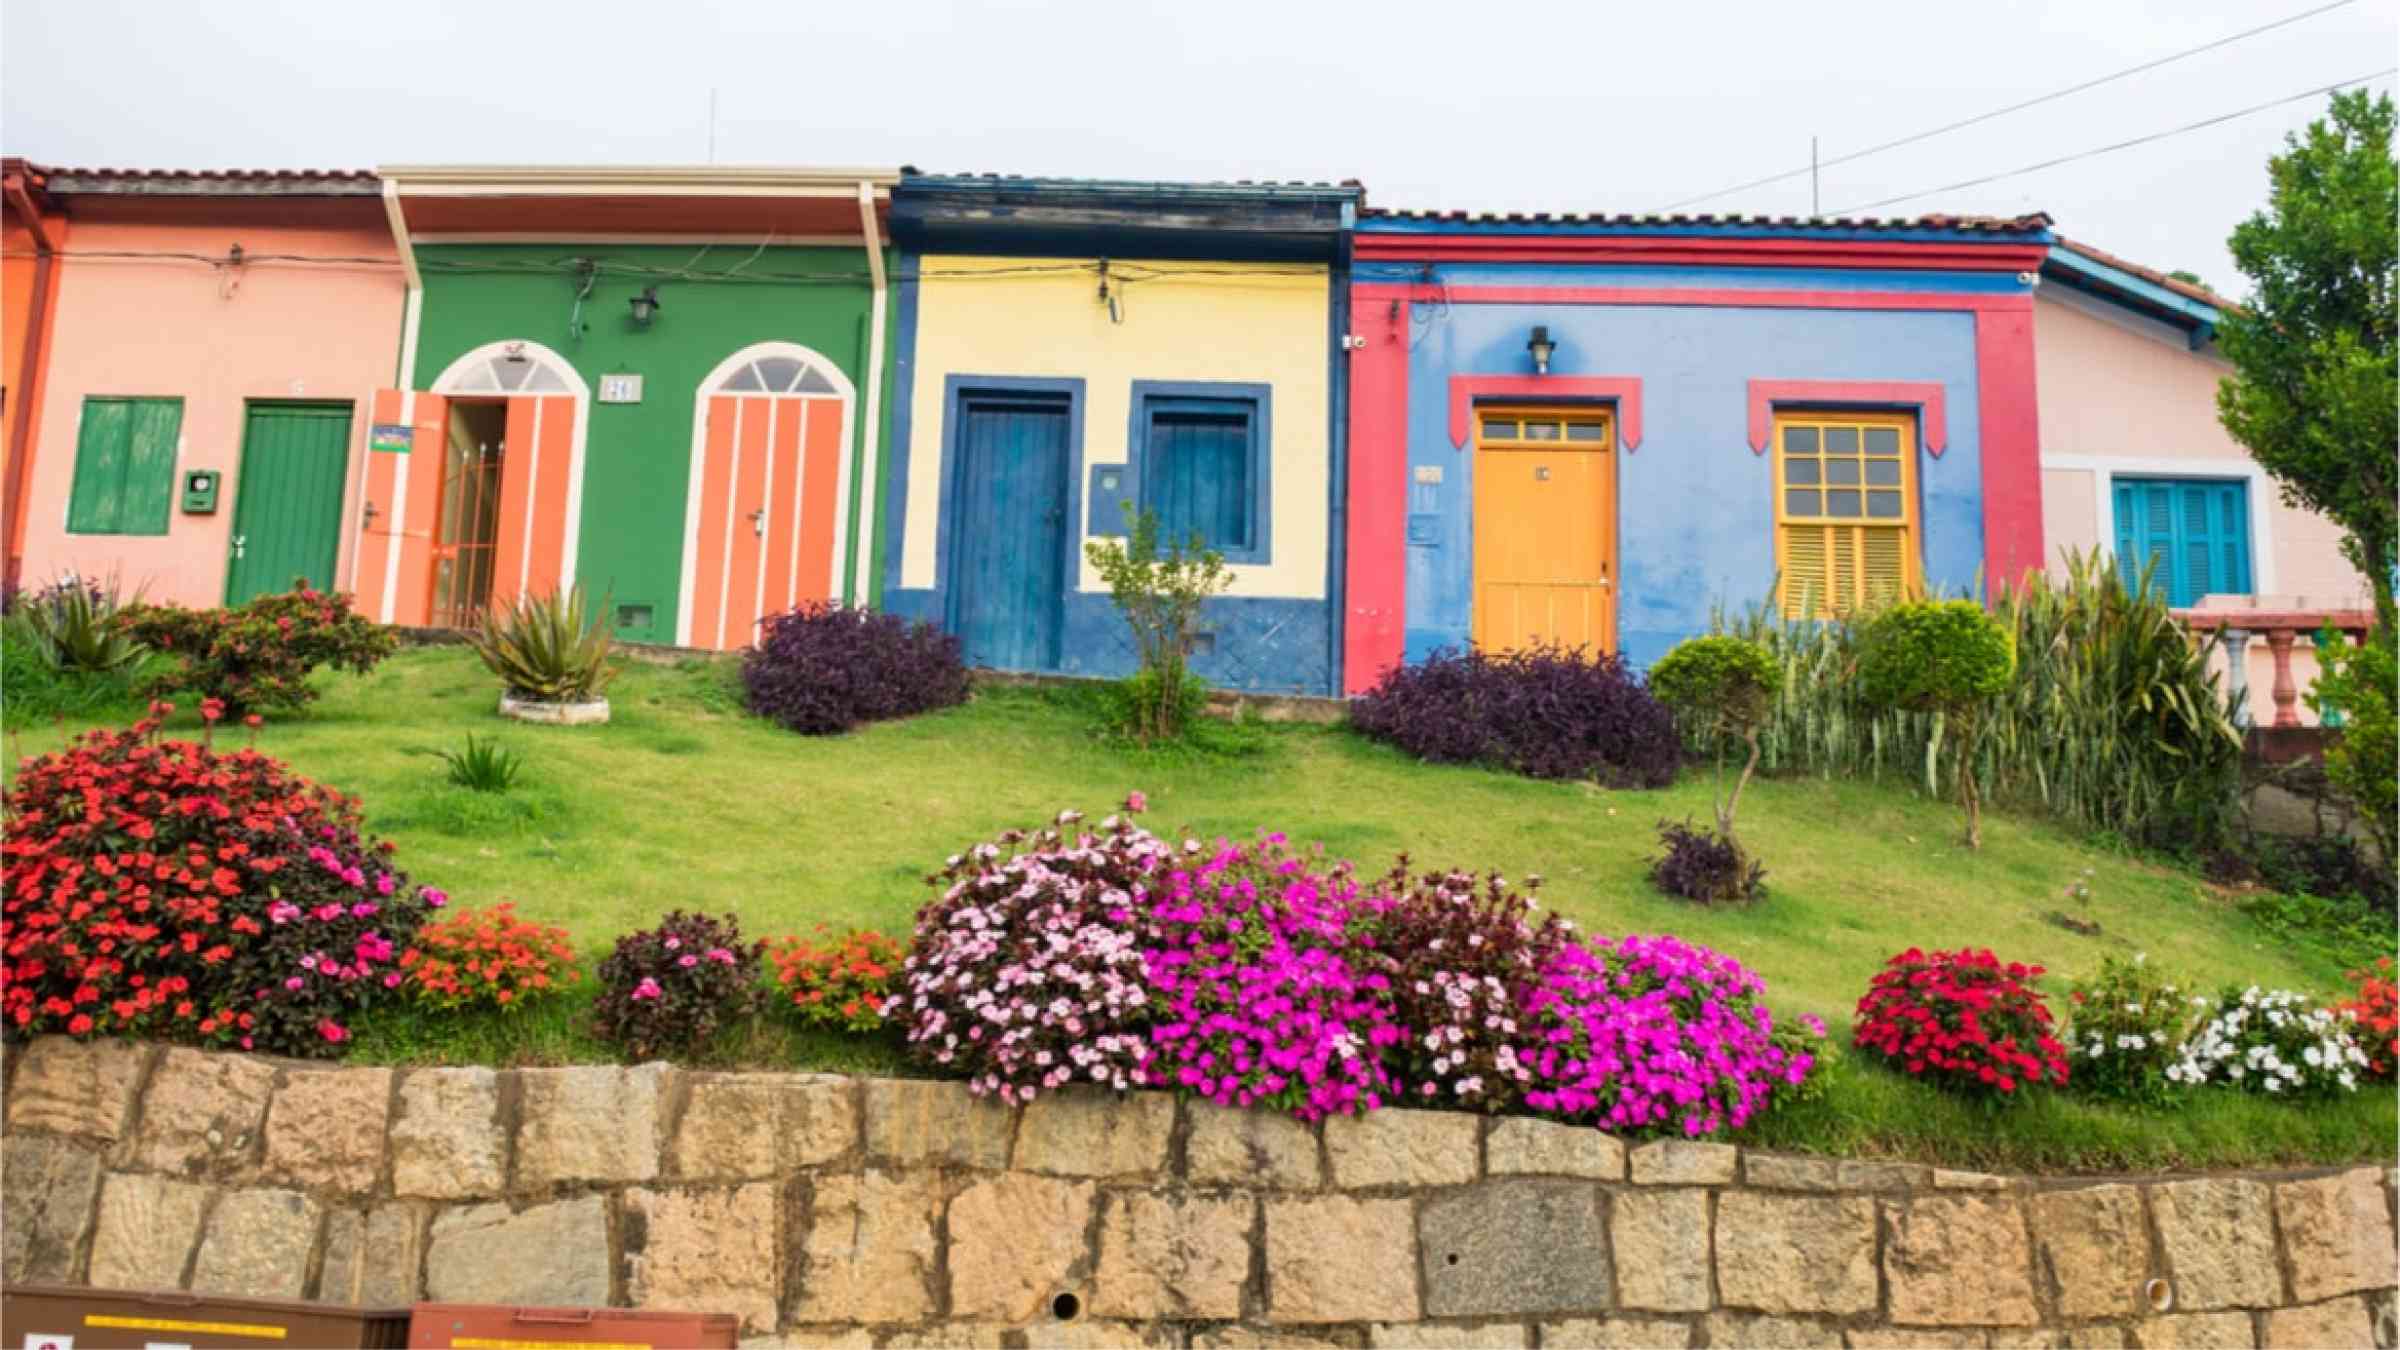 Colorful houses in the historic center of Sao Luiz do Paraitinga, Sao Paulo state, Brazil.